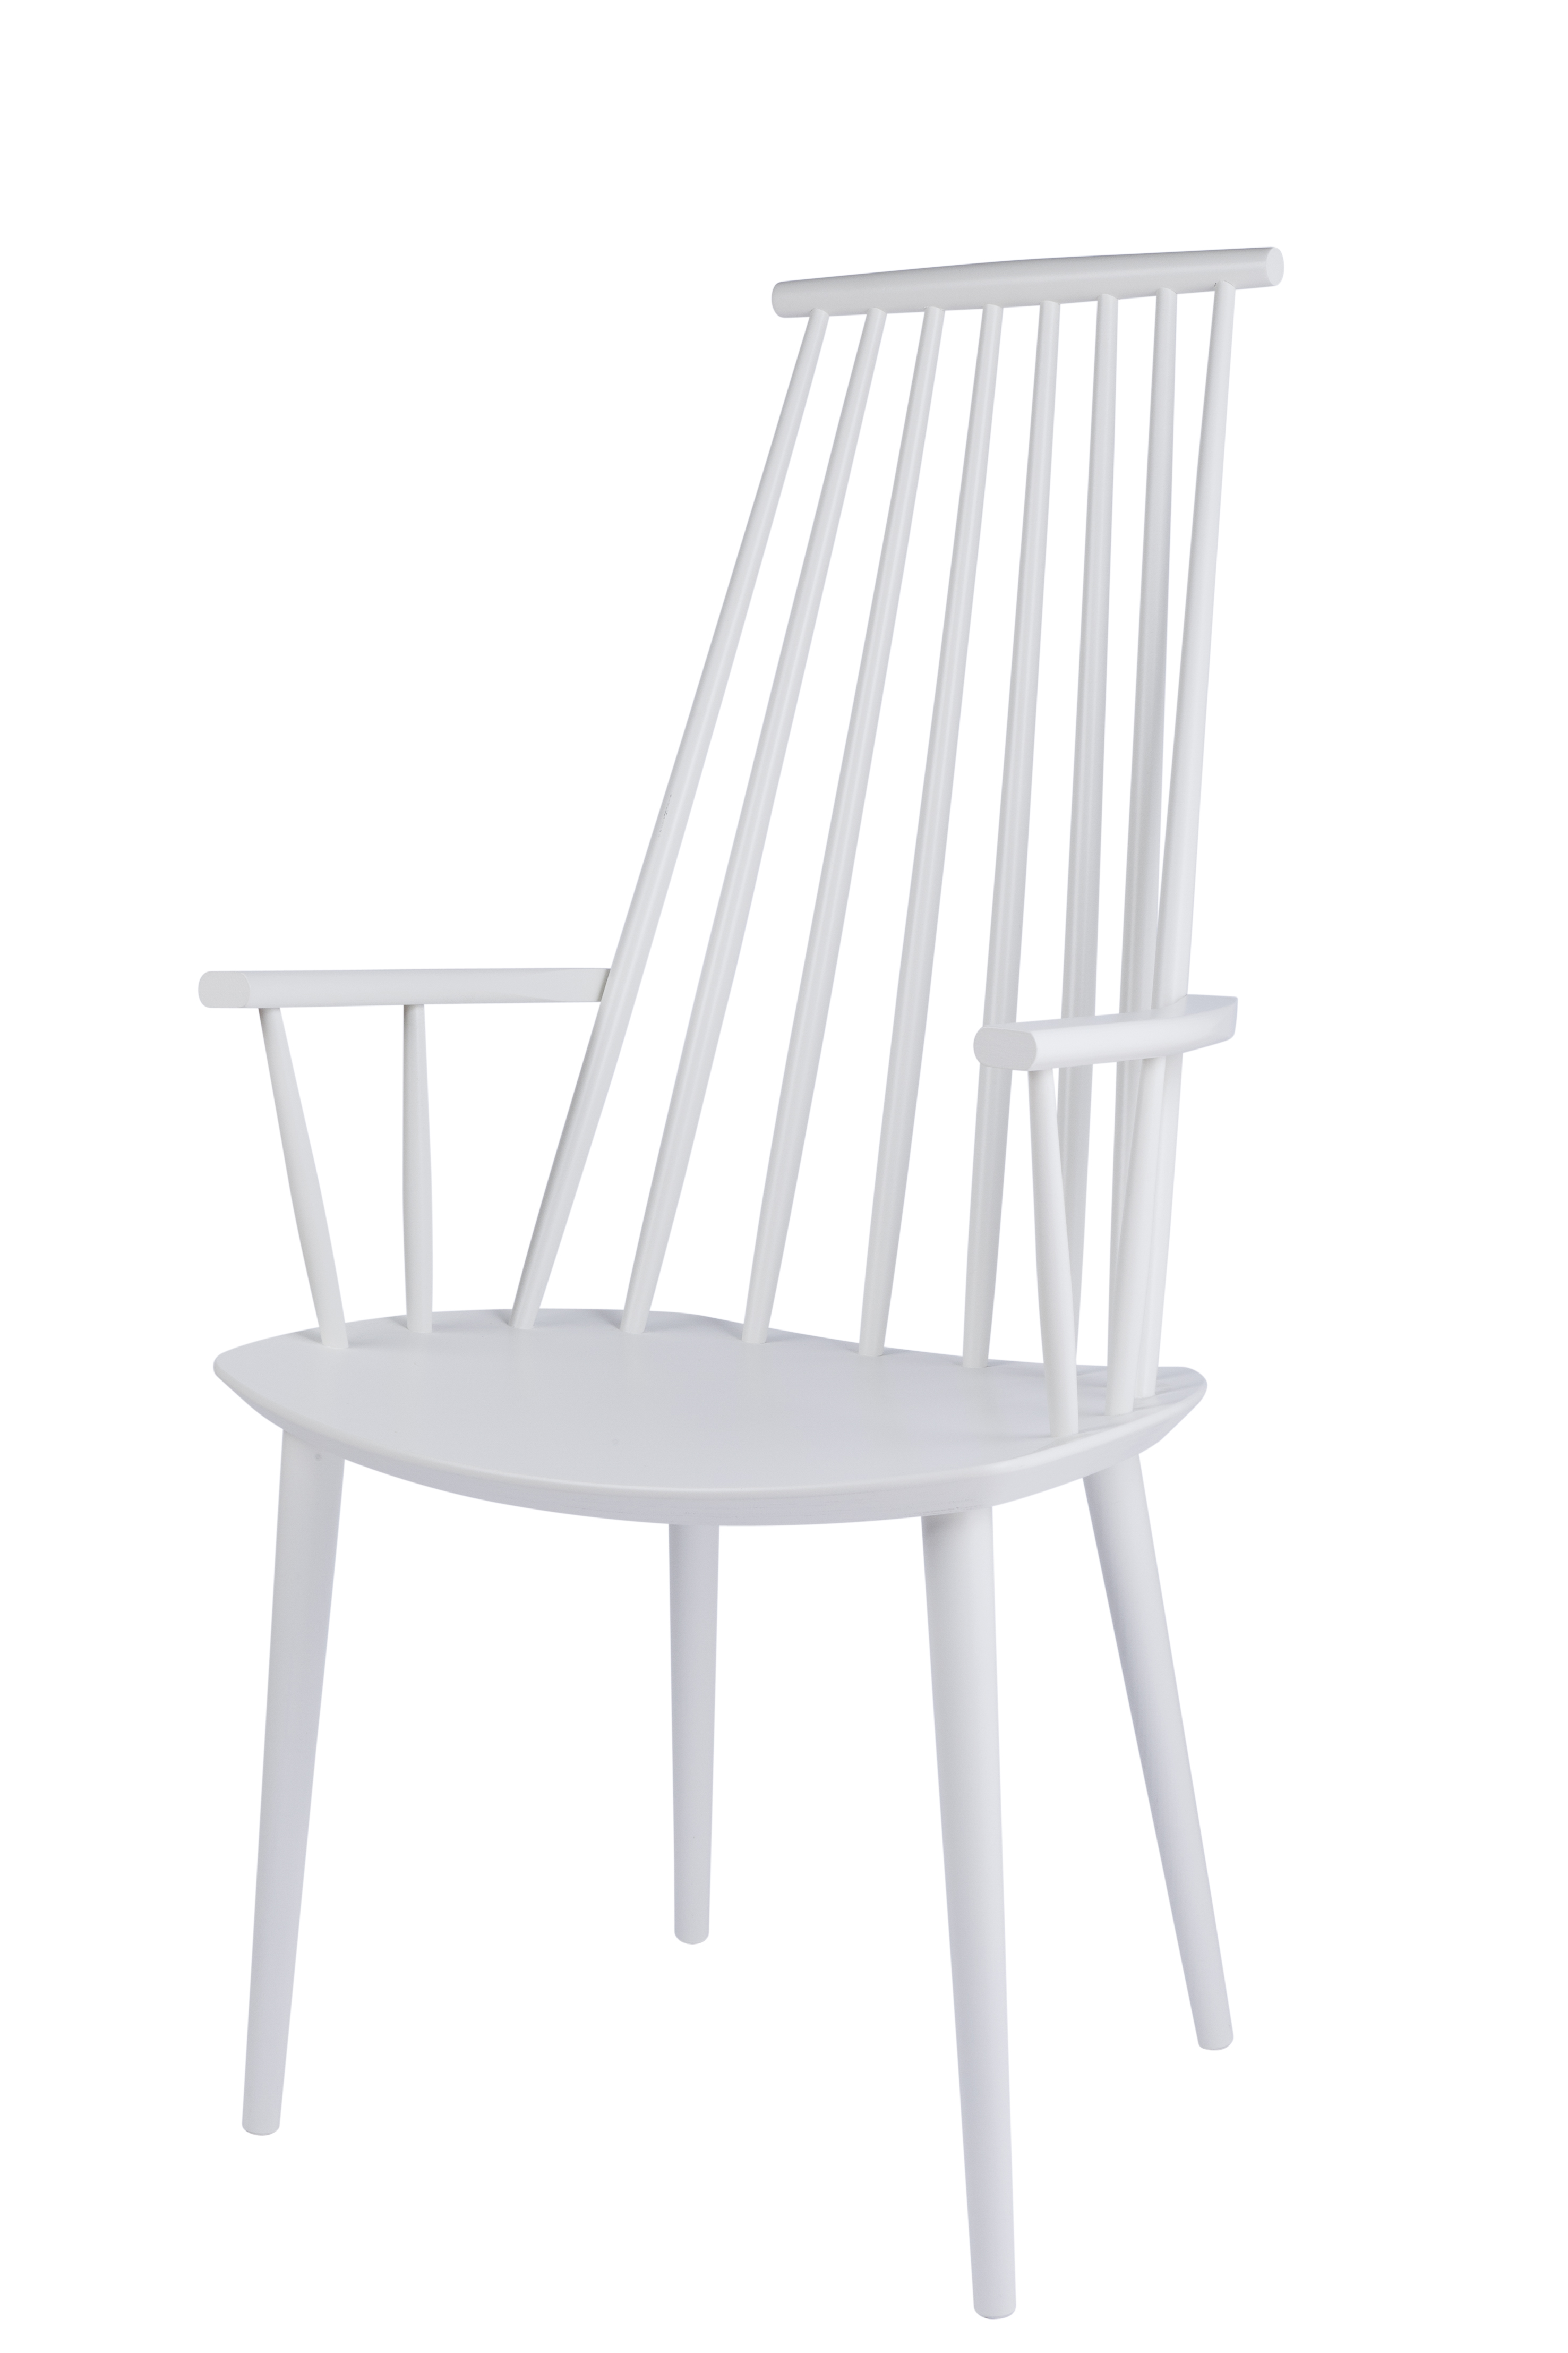 HAY - J110 FDB Chair - White